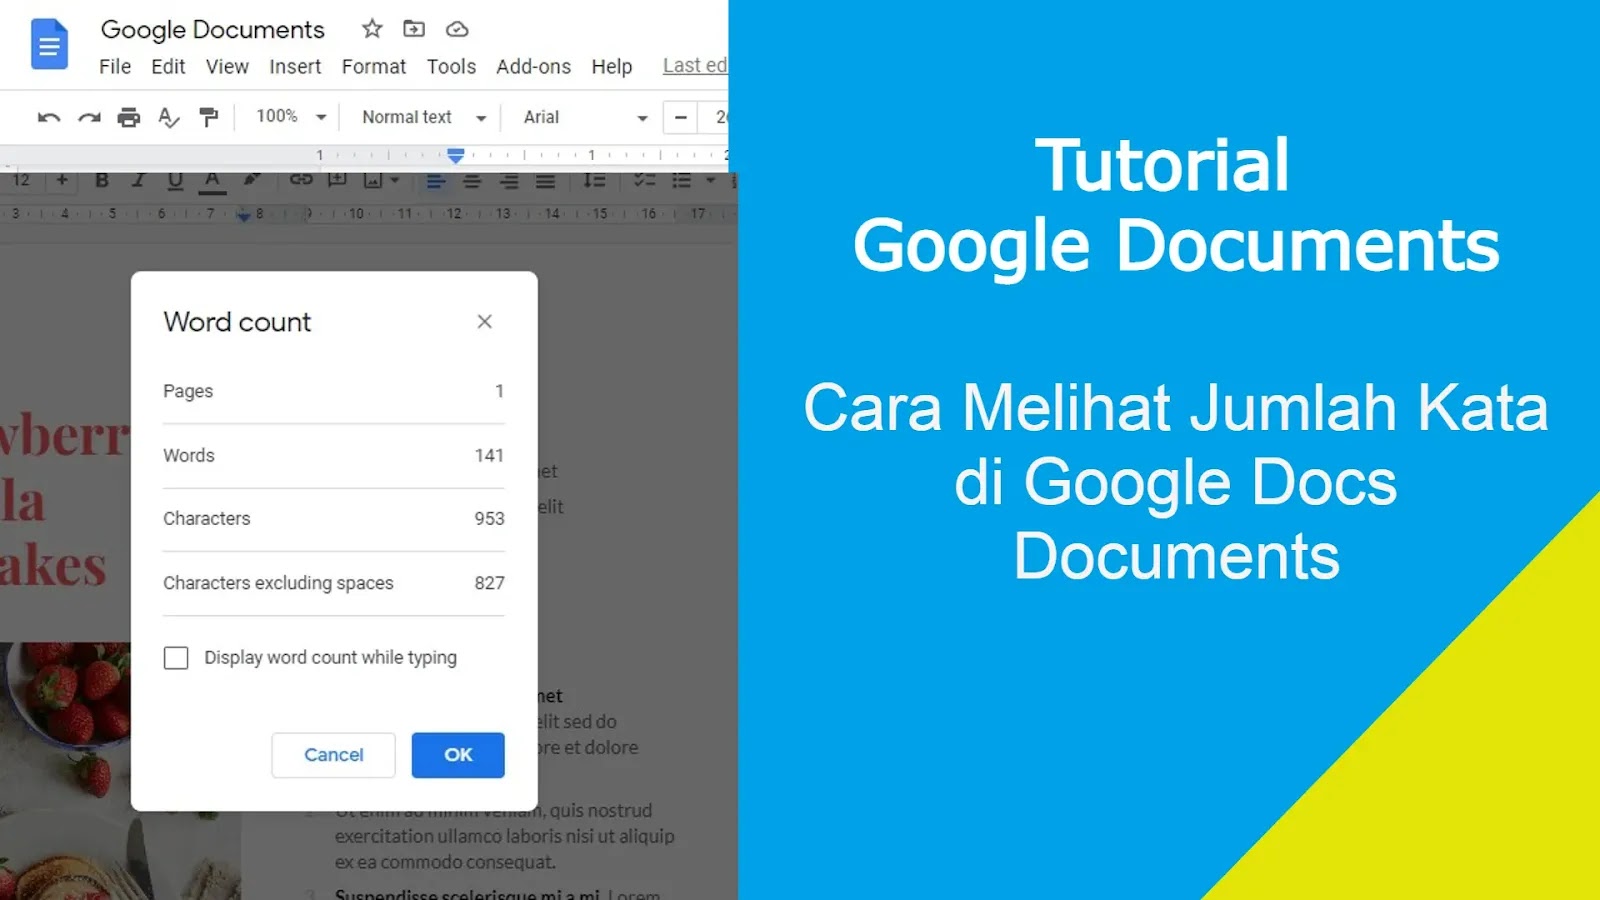 Cara Melihat Jumlah Kata di Google Docs Documents